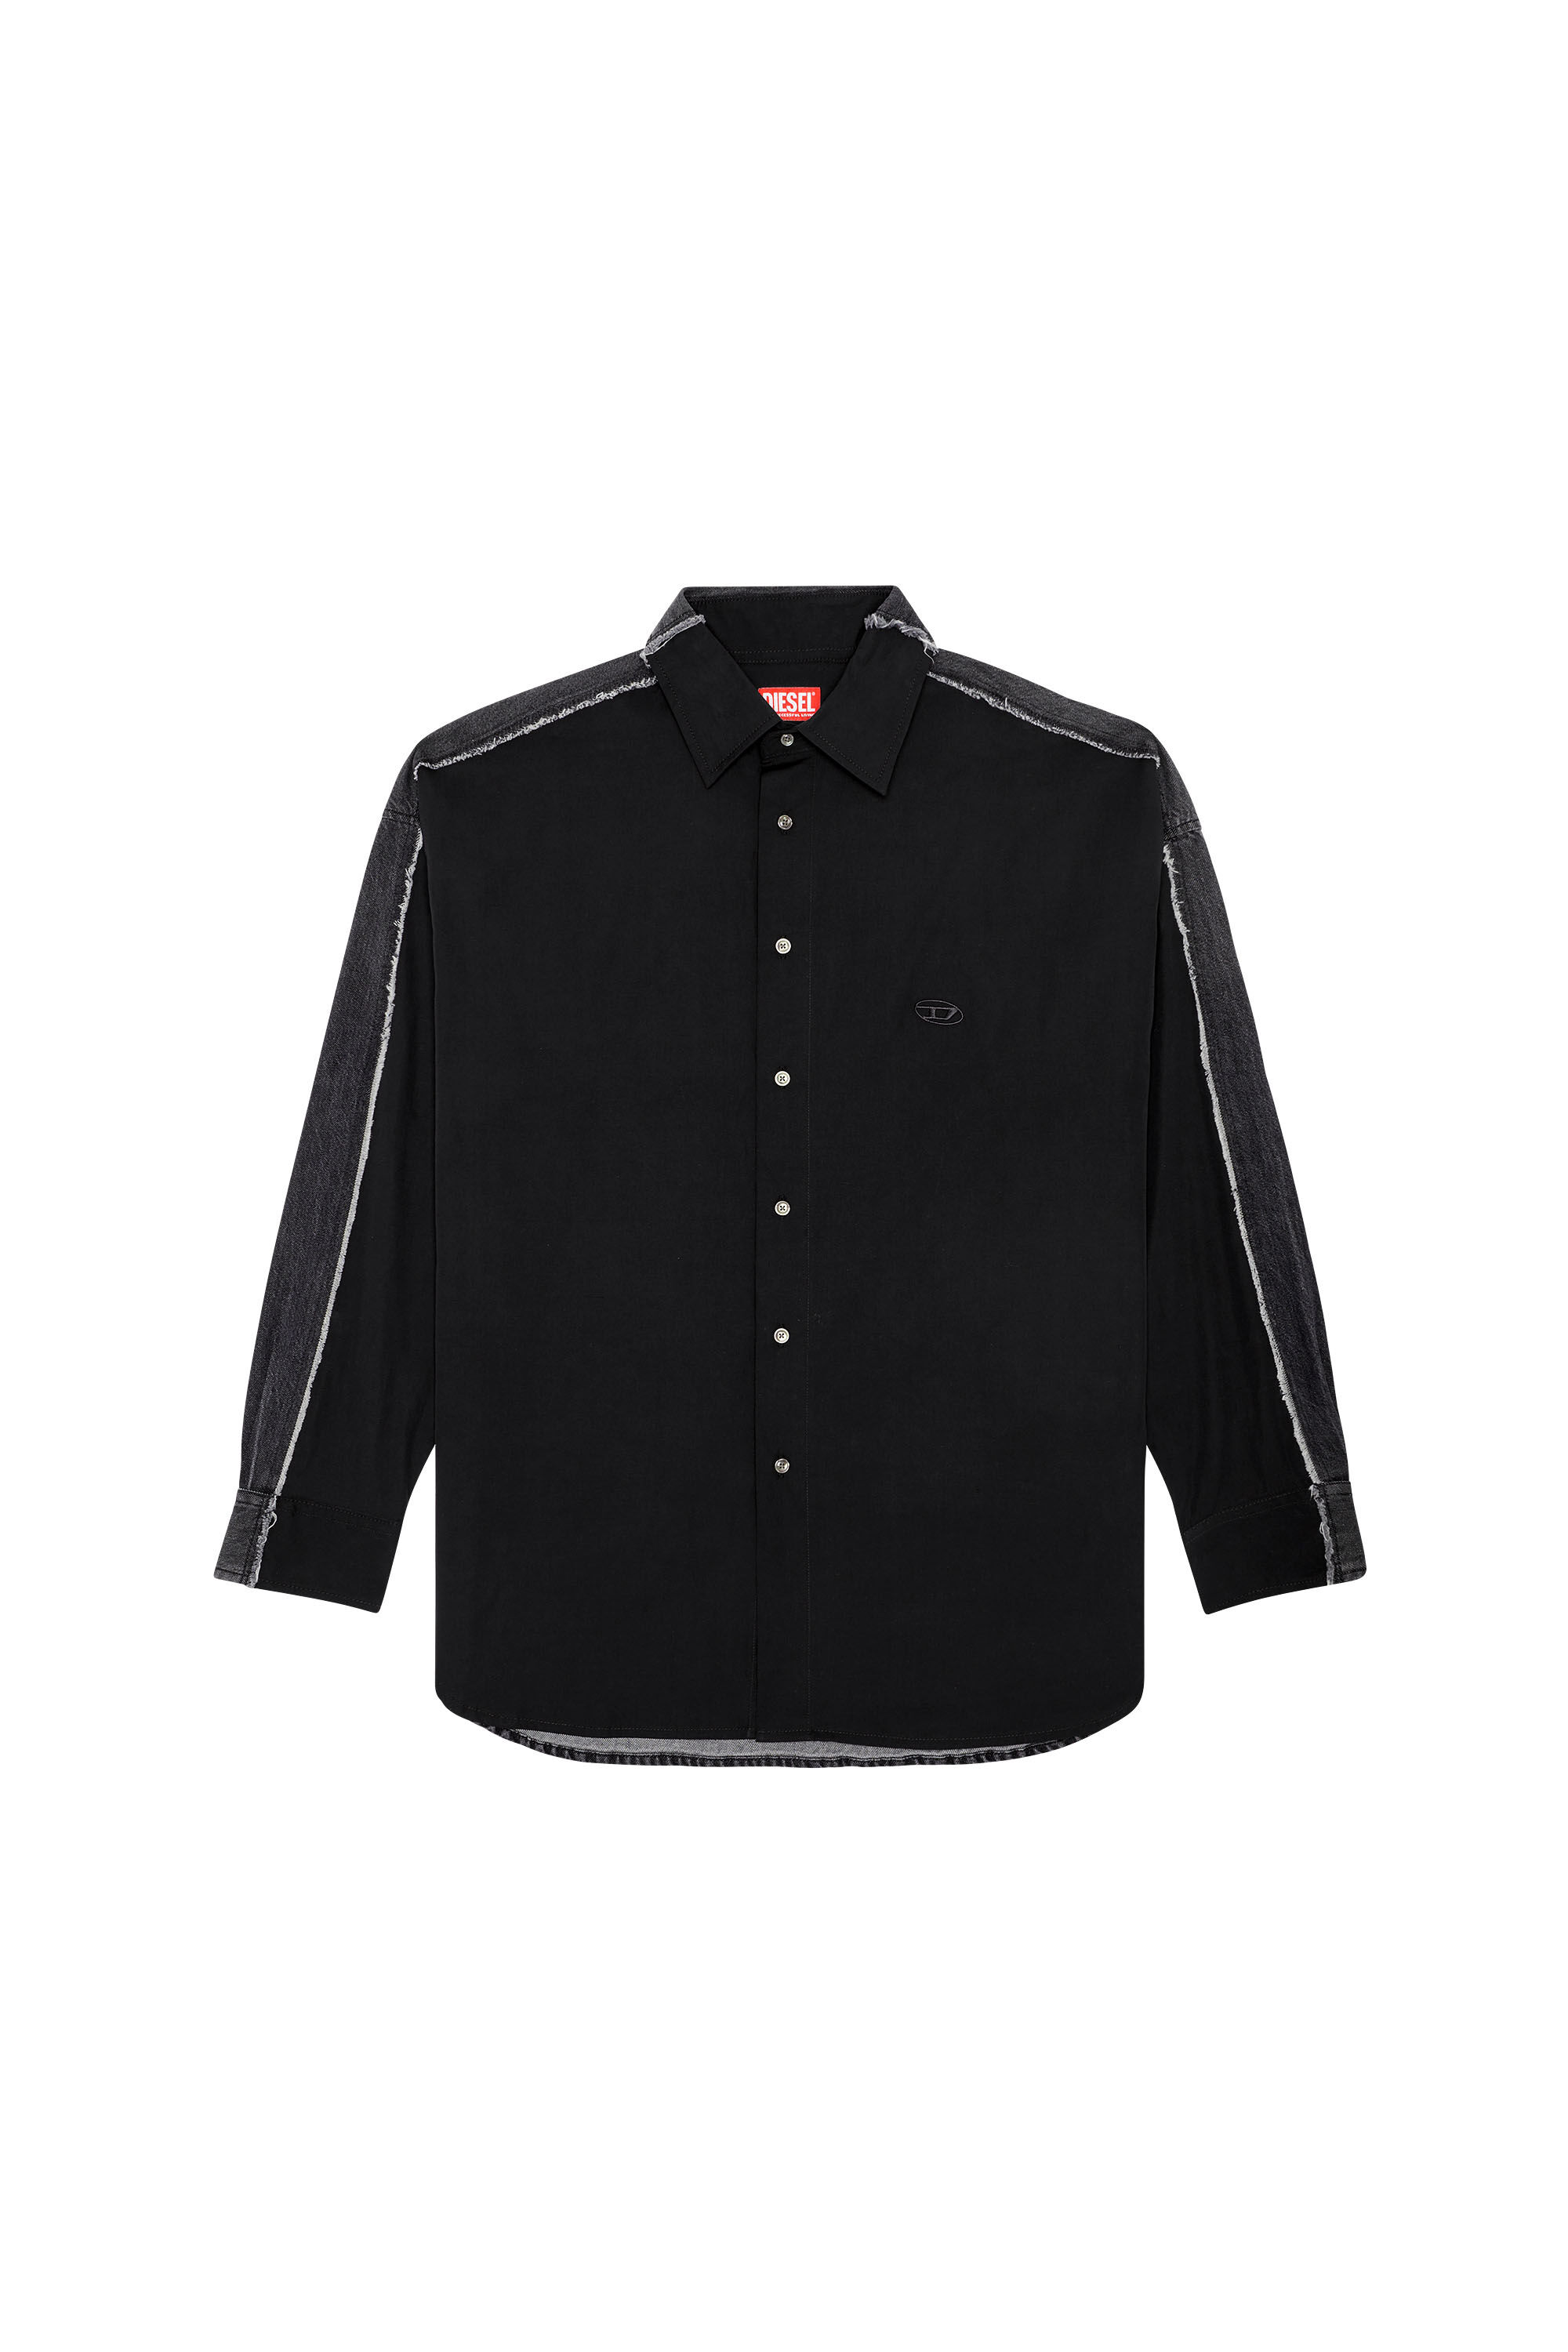 Diesel - S-WARH, Man Shirt in poplin and raw-edge denim in Black - Image 2